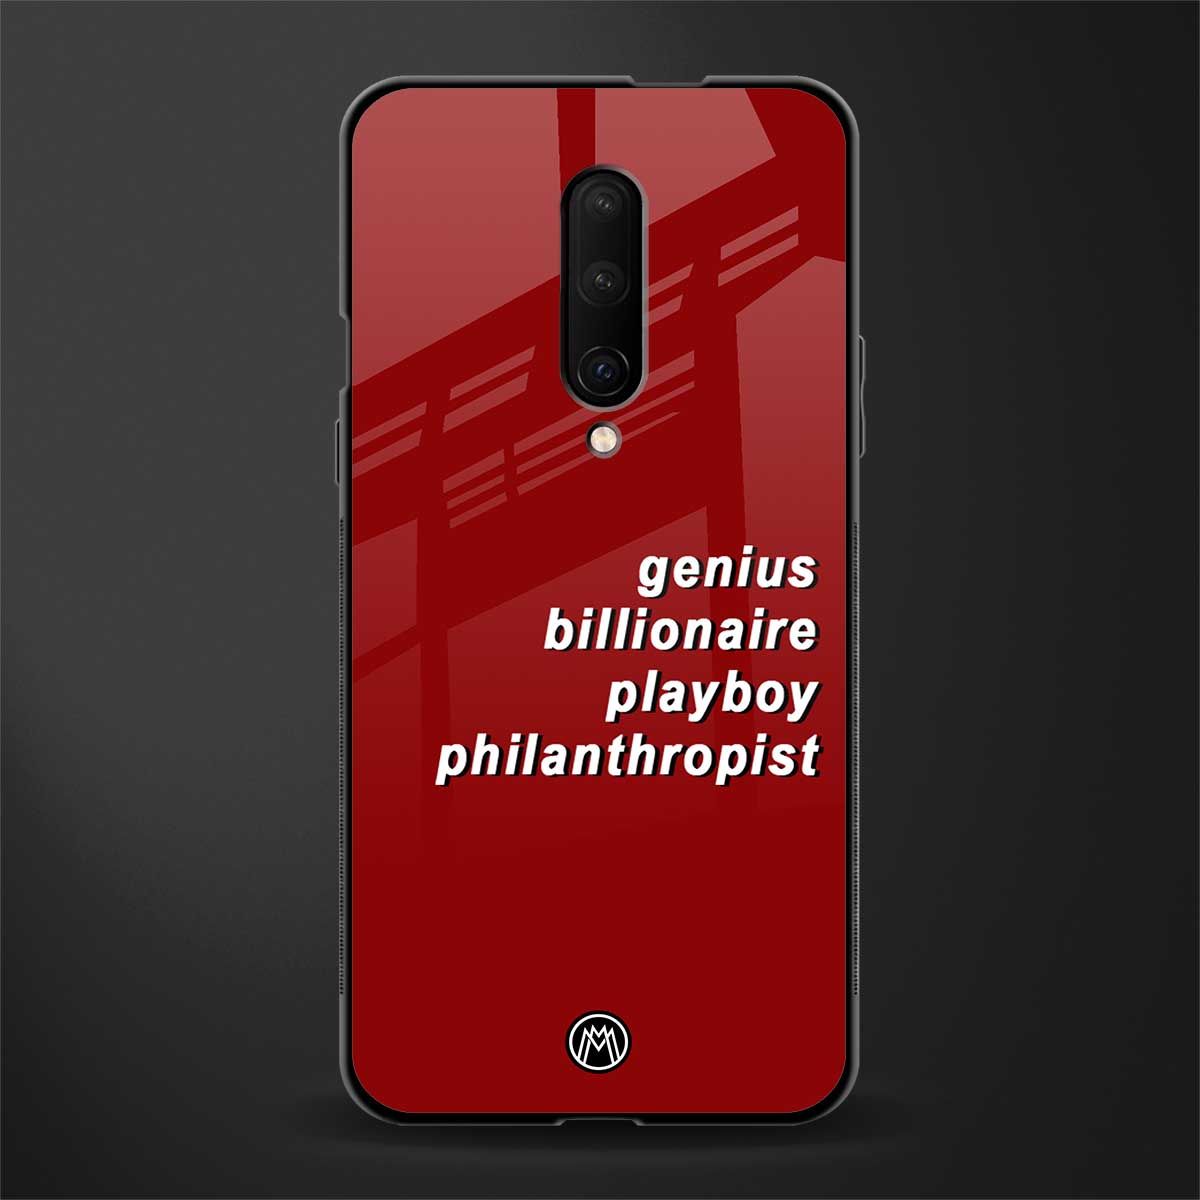 genius billionaire playboy philantrophist glass case for oneplus 7 pro image